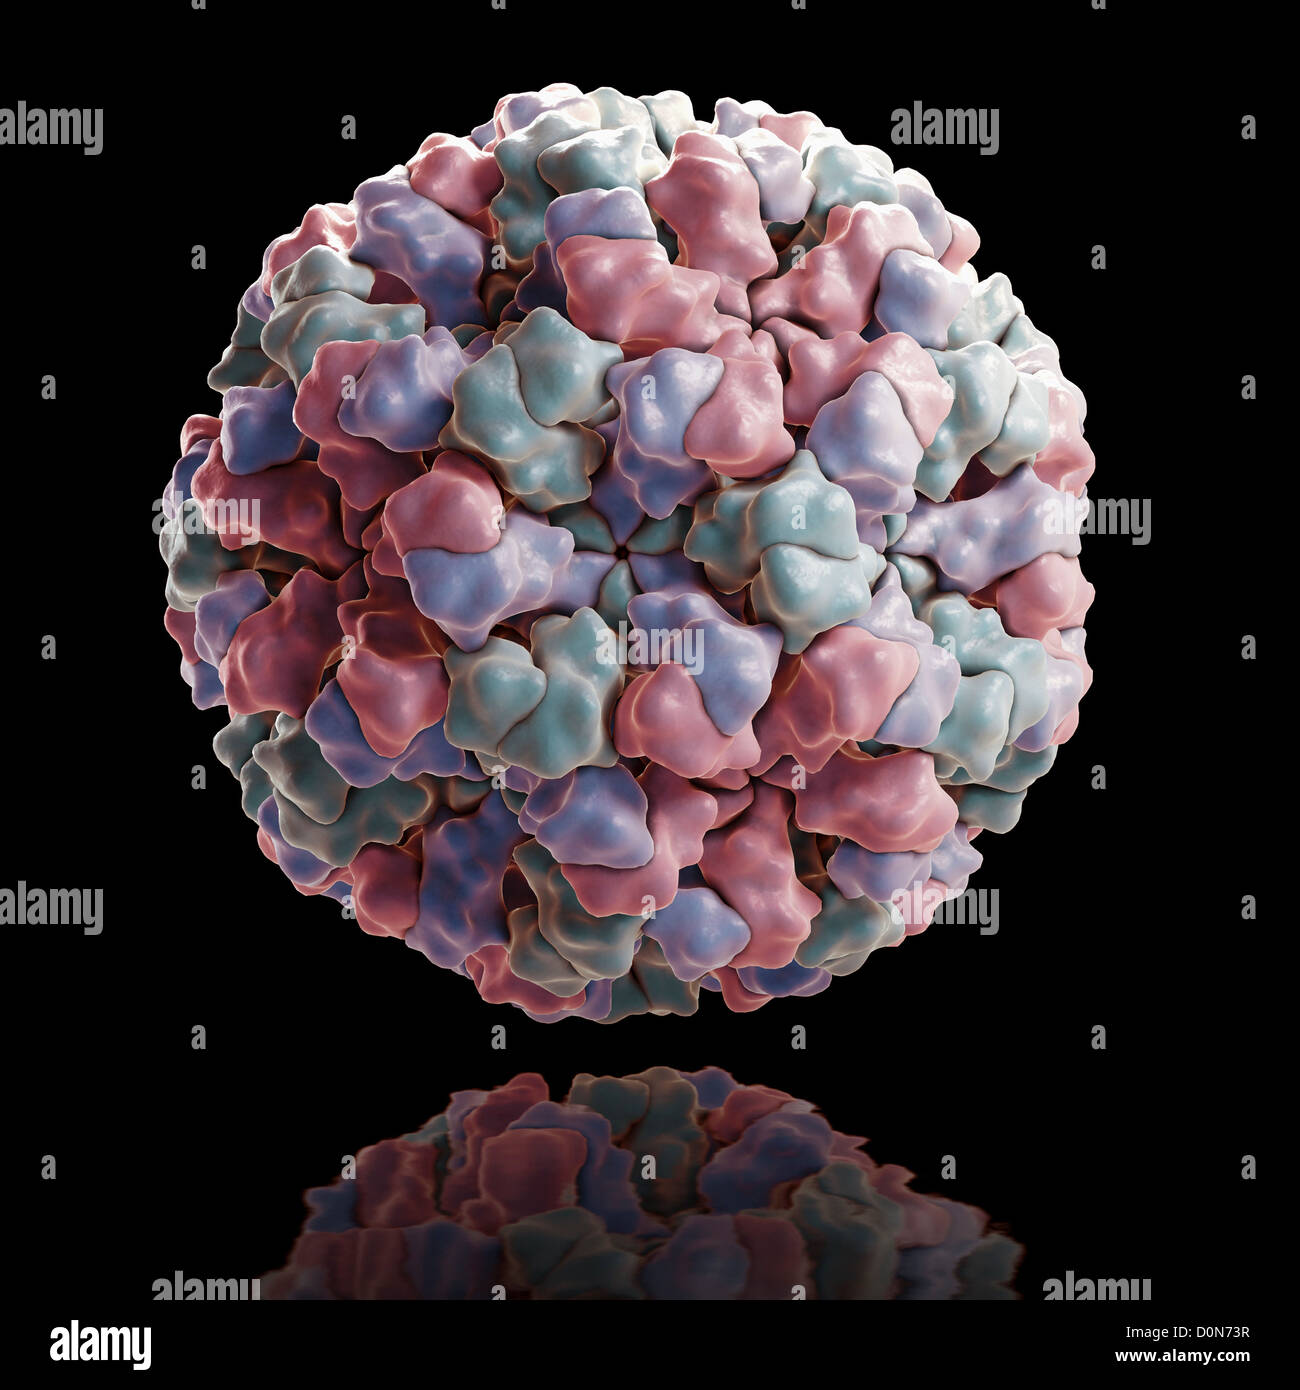 Structure Norwalk virus (1HIM) RNA virus family Caliciviridae major cause epidemic gastroenteritis in humans. Stock Photo